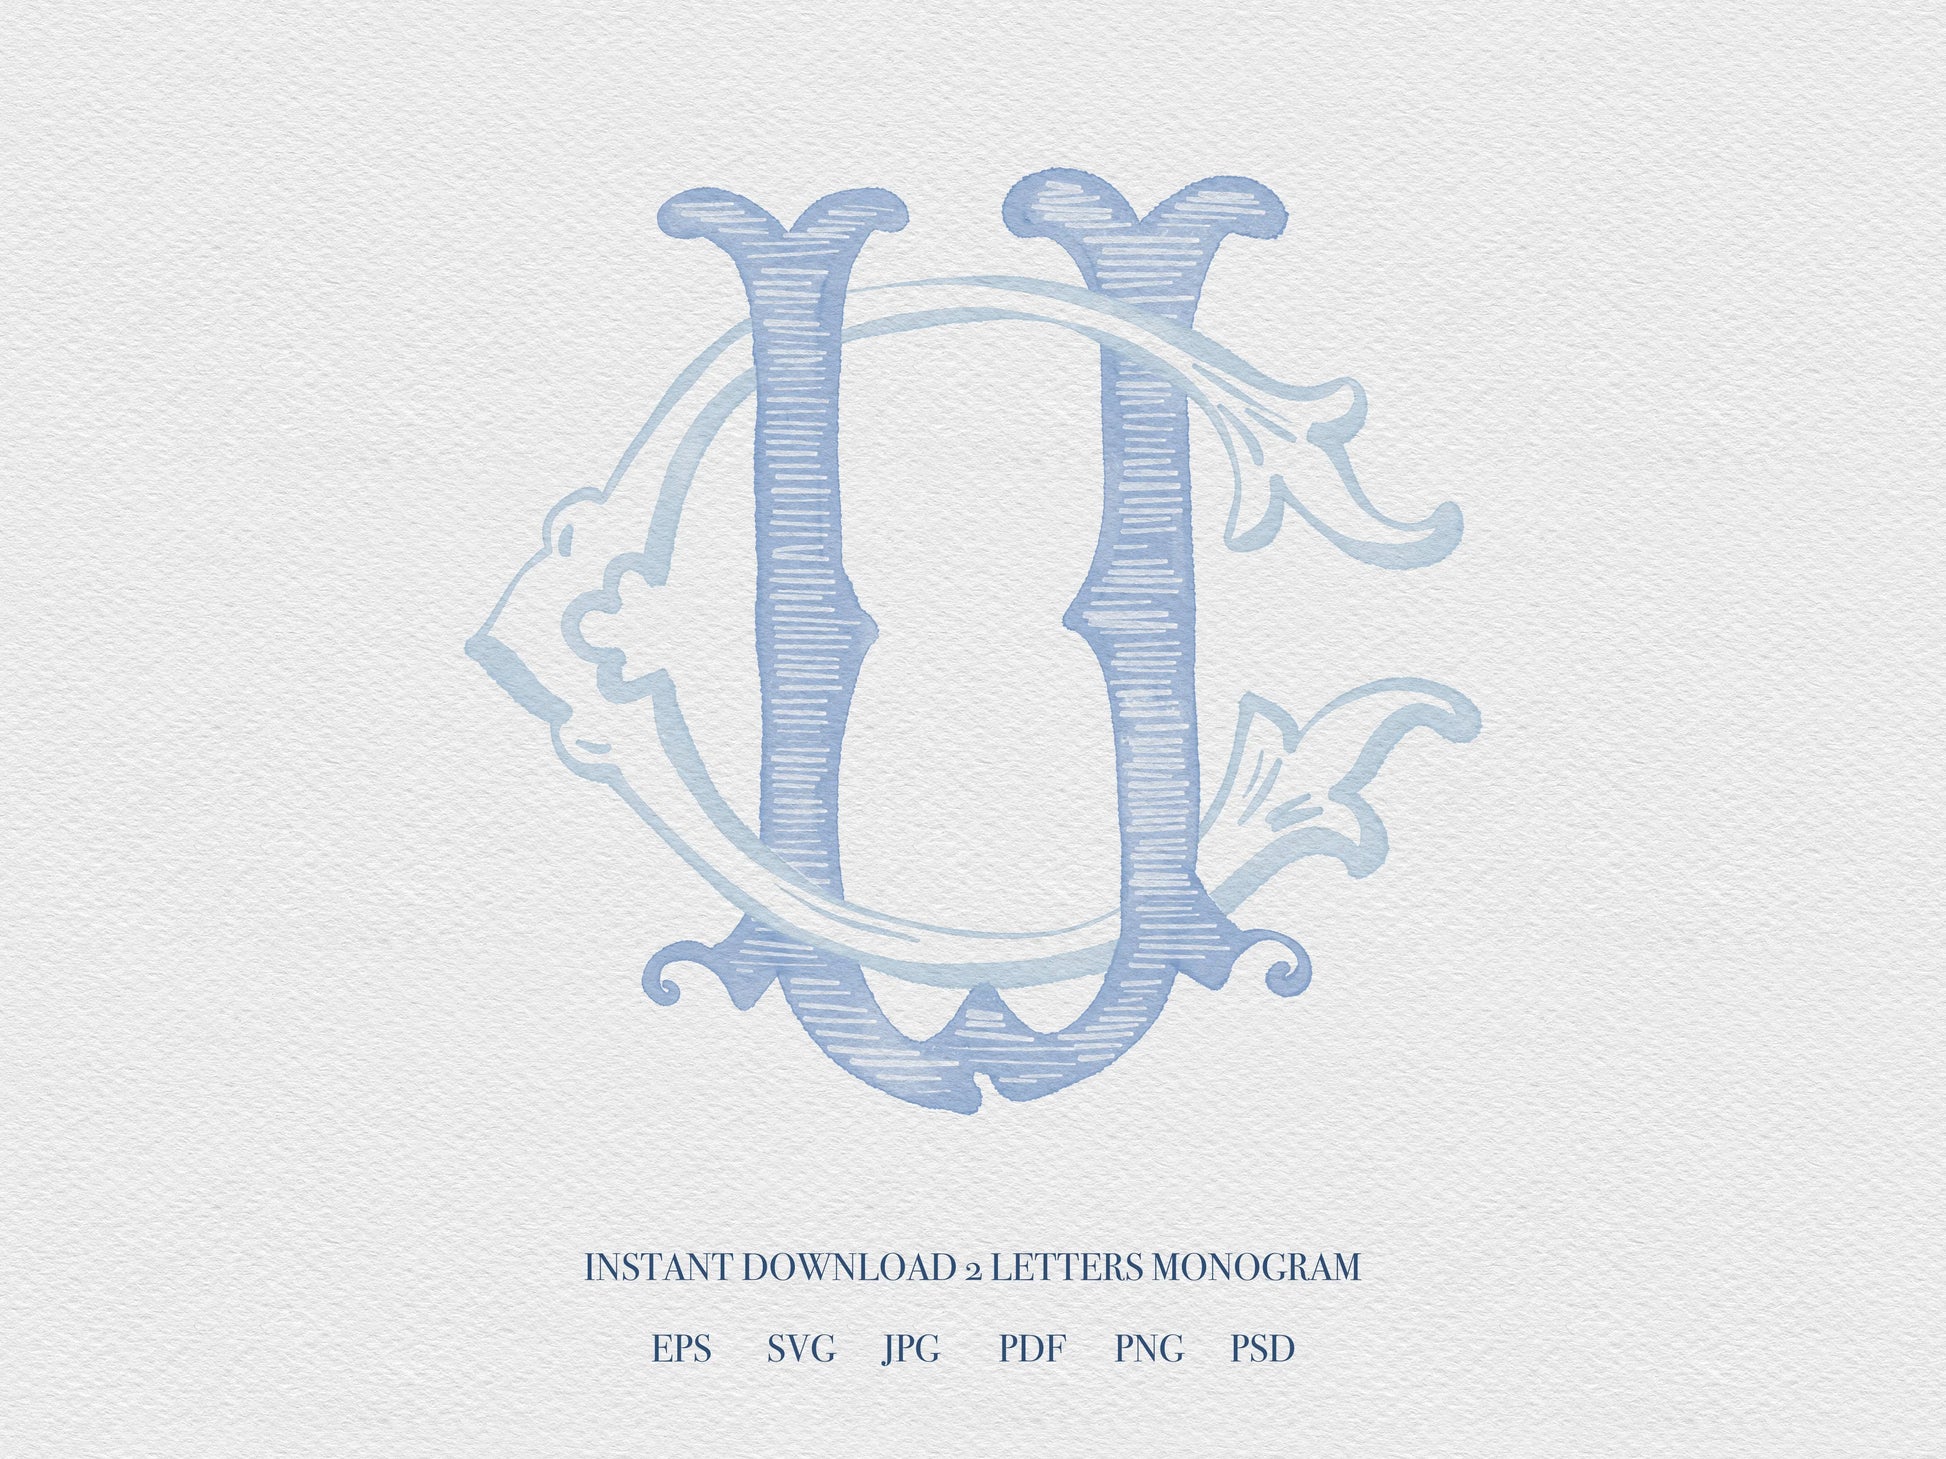 2 Letter Monogram with Letters UC | Digital Download - Wedding Monogram SVG, Personal Logo, Wedding Logo for Wedding Invitations The Wedding Crest Lab